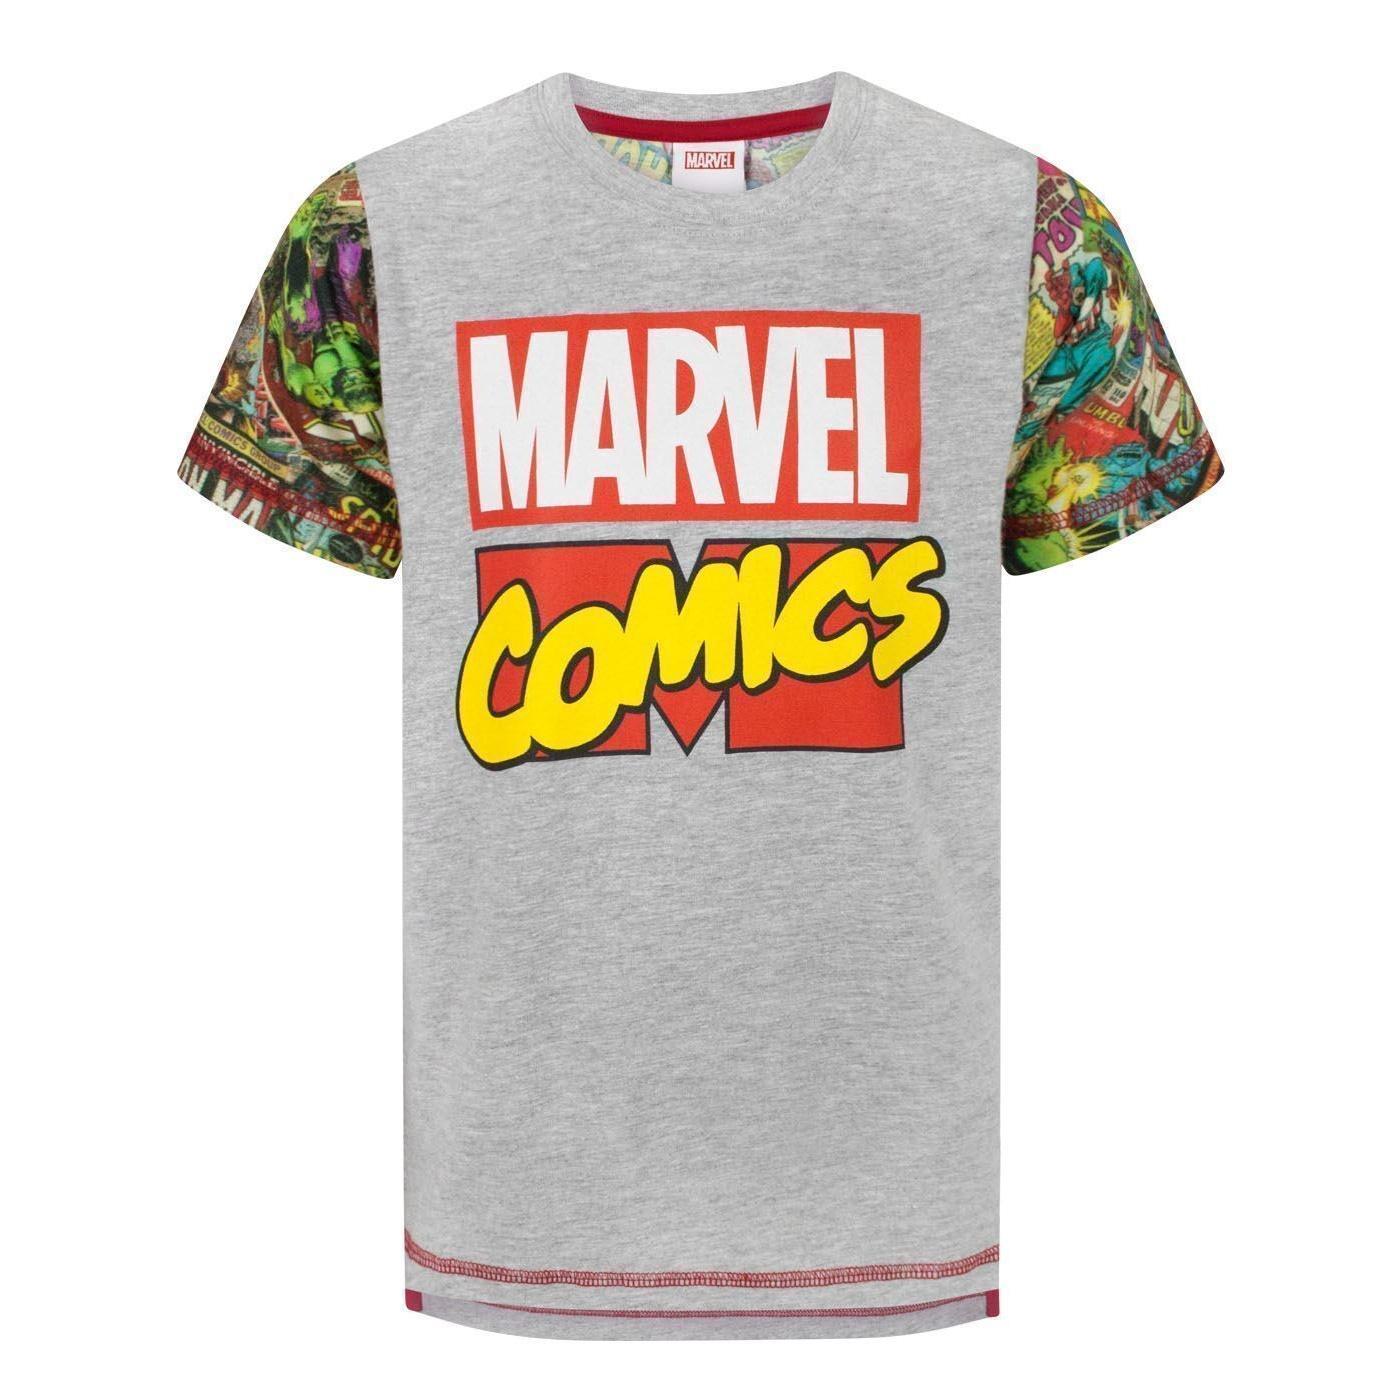 Marvel Comics Boys Printed T-Shirt (Heather Grey/Red/Green) (5-6 Years)